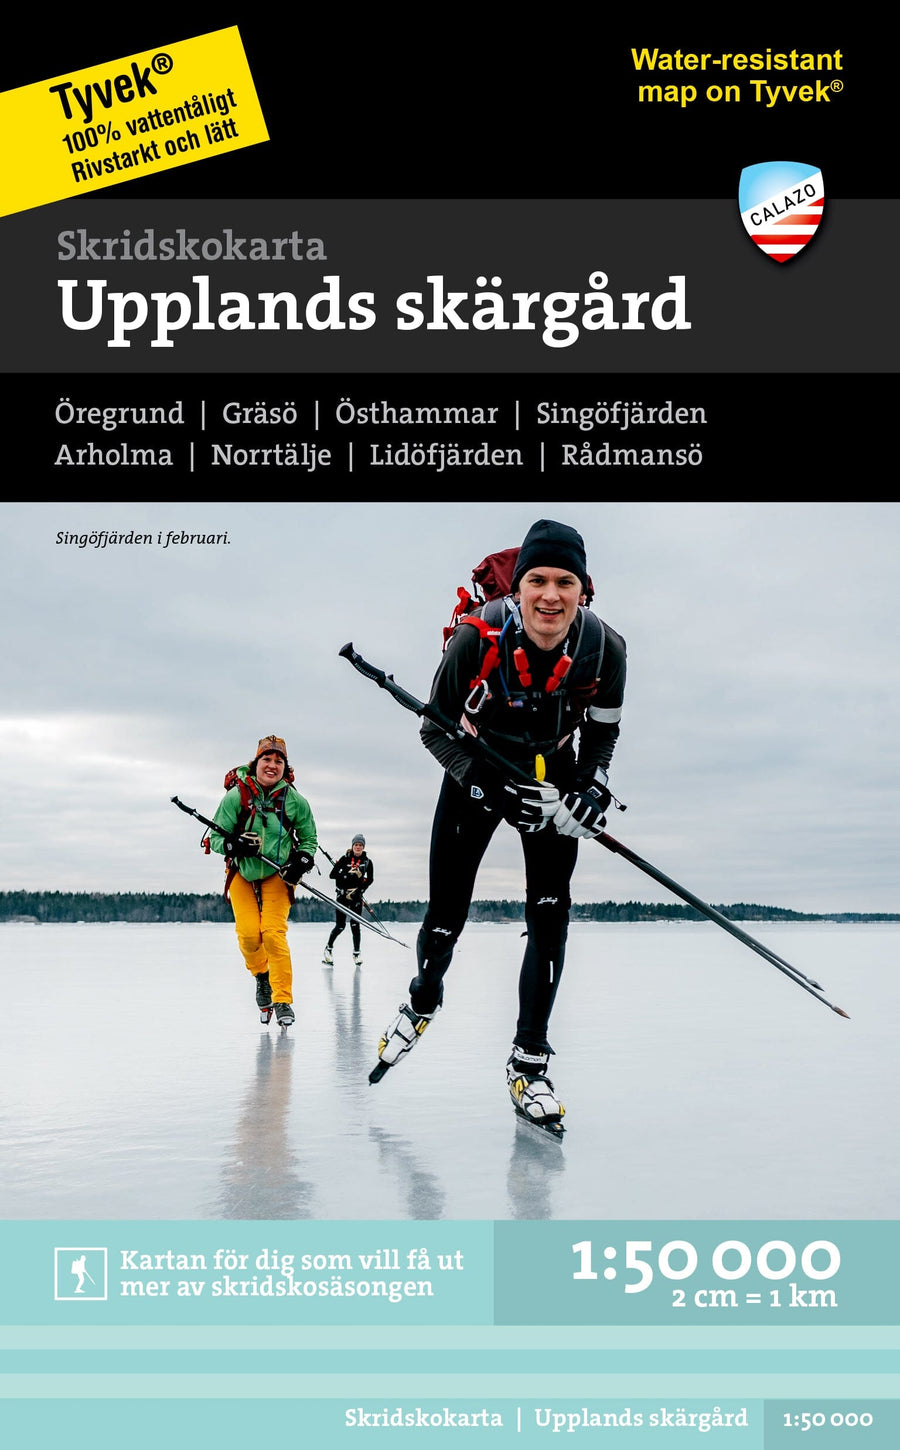 Carte de patinage - Upplands skärgård (Suède) | Calazo carte pliée Calazo 